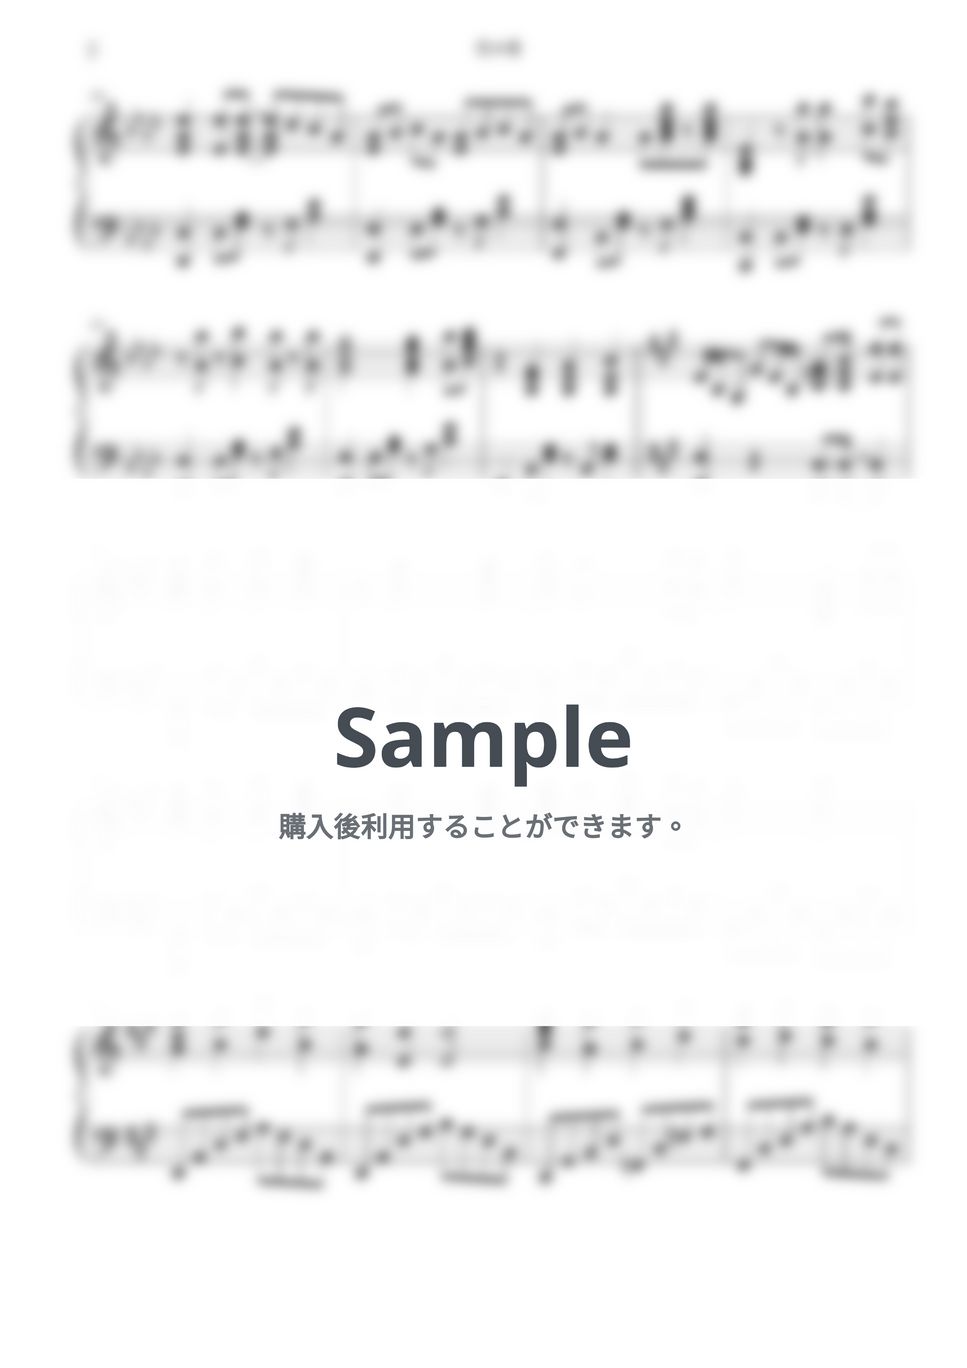 Sayuri - 花の塔 (リコリス・リコイル OST) by Free Space / Anime Piano Covers